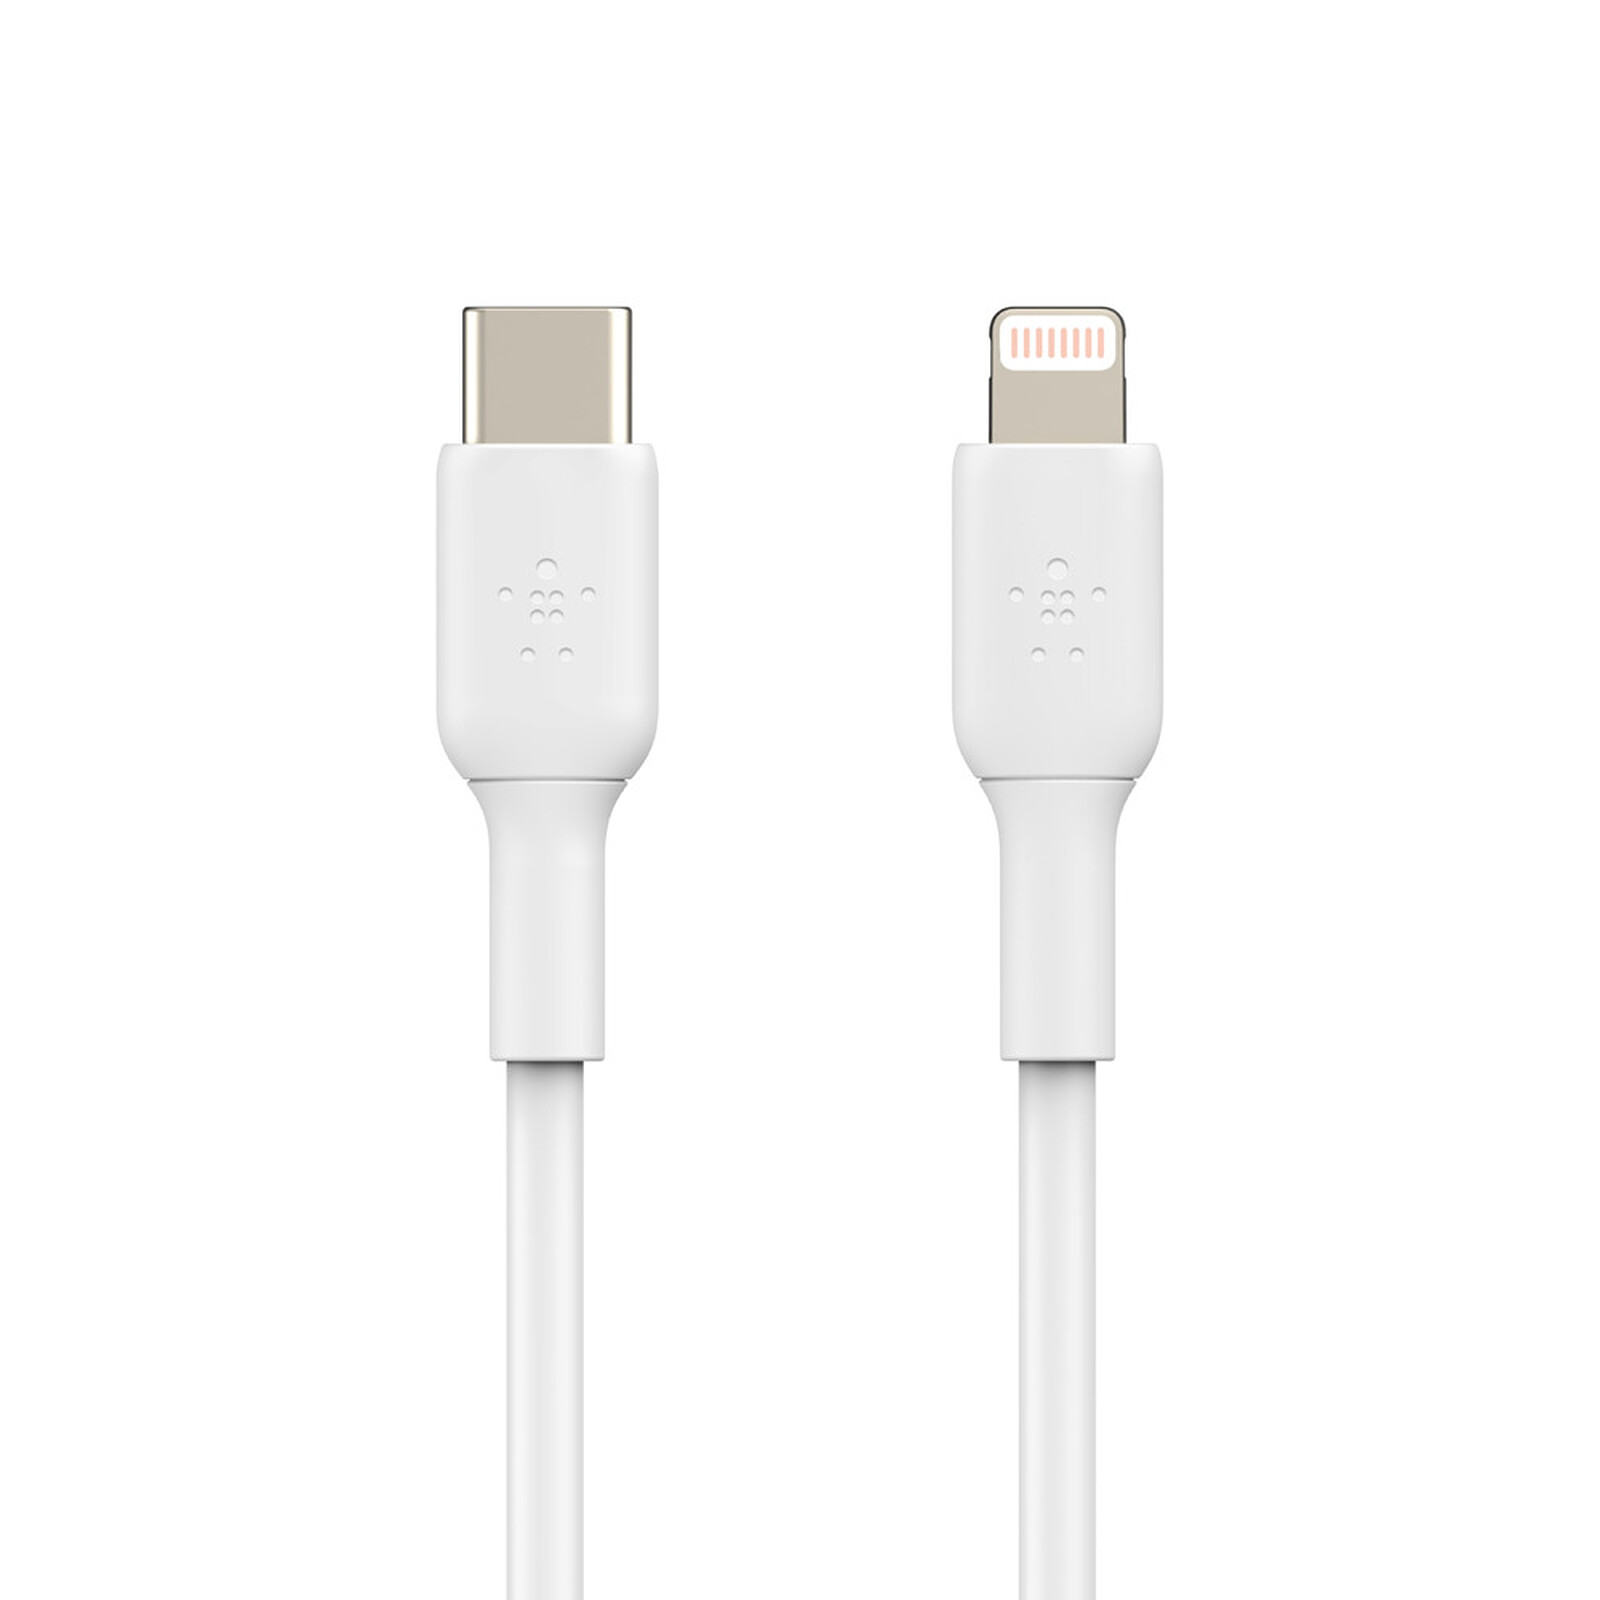 Belkin Câble USB-A vers Lightning MFI (noir) - 1 m - Accessoires Apple -  Garantie 3 ans LDLC